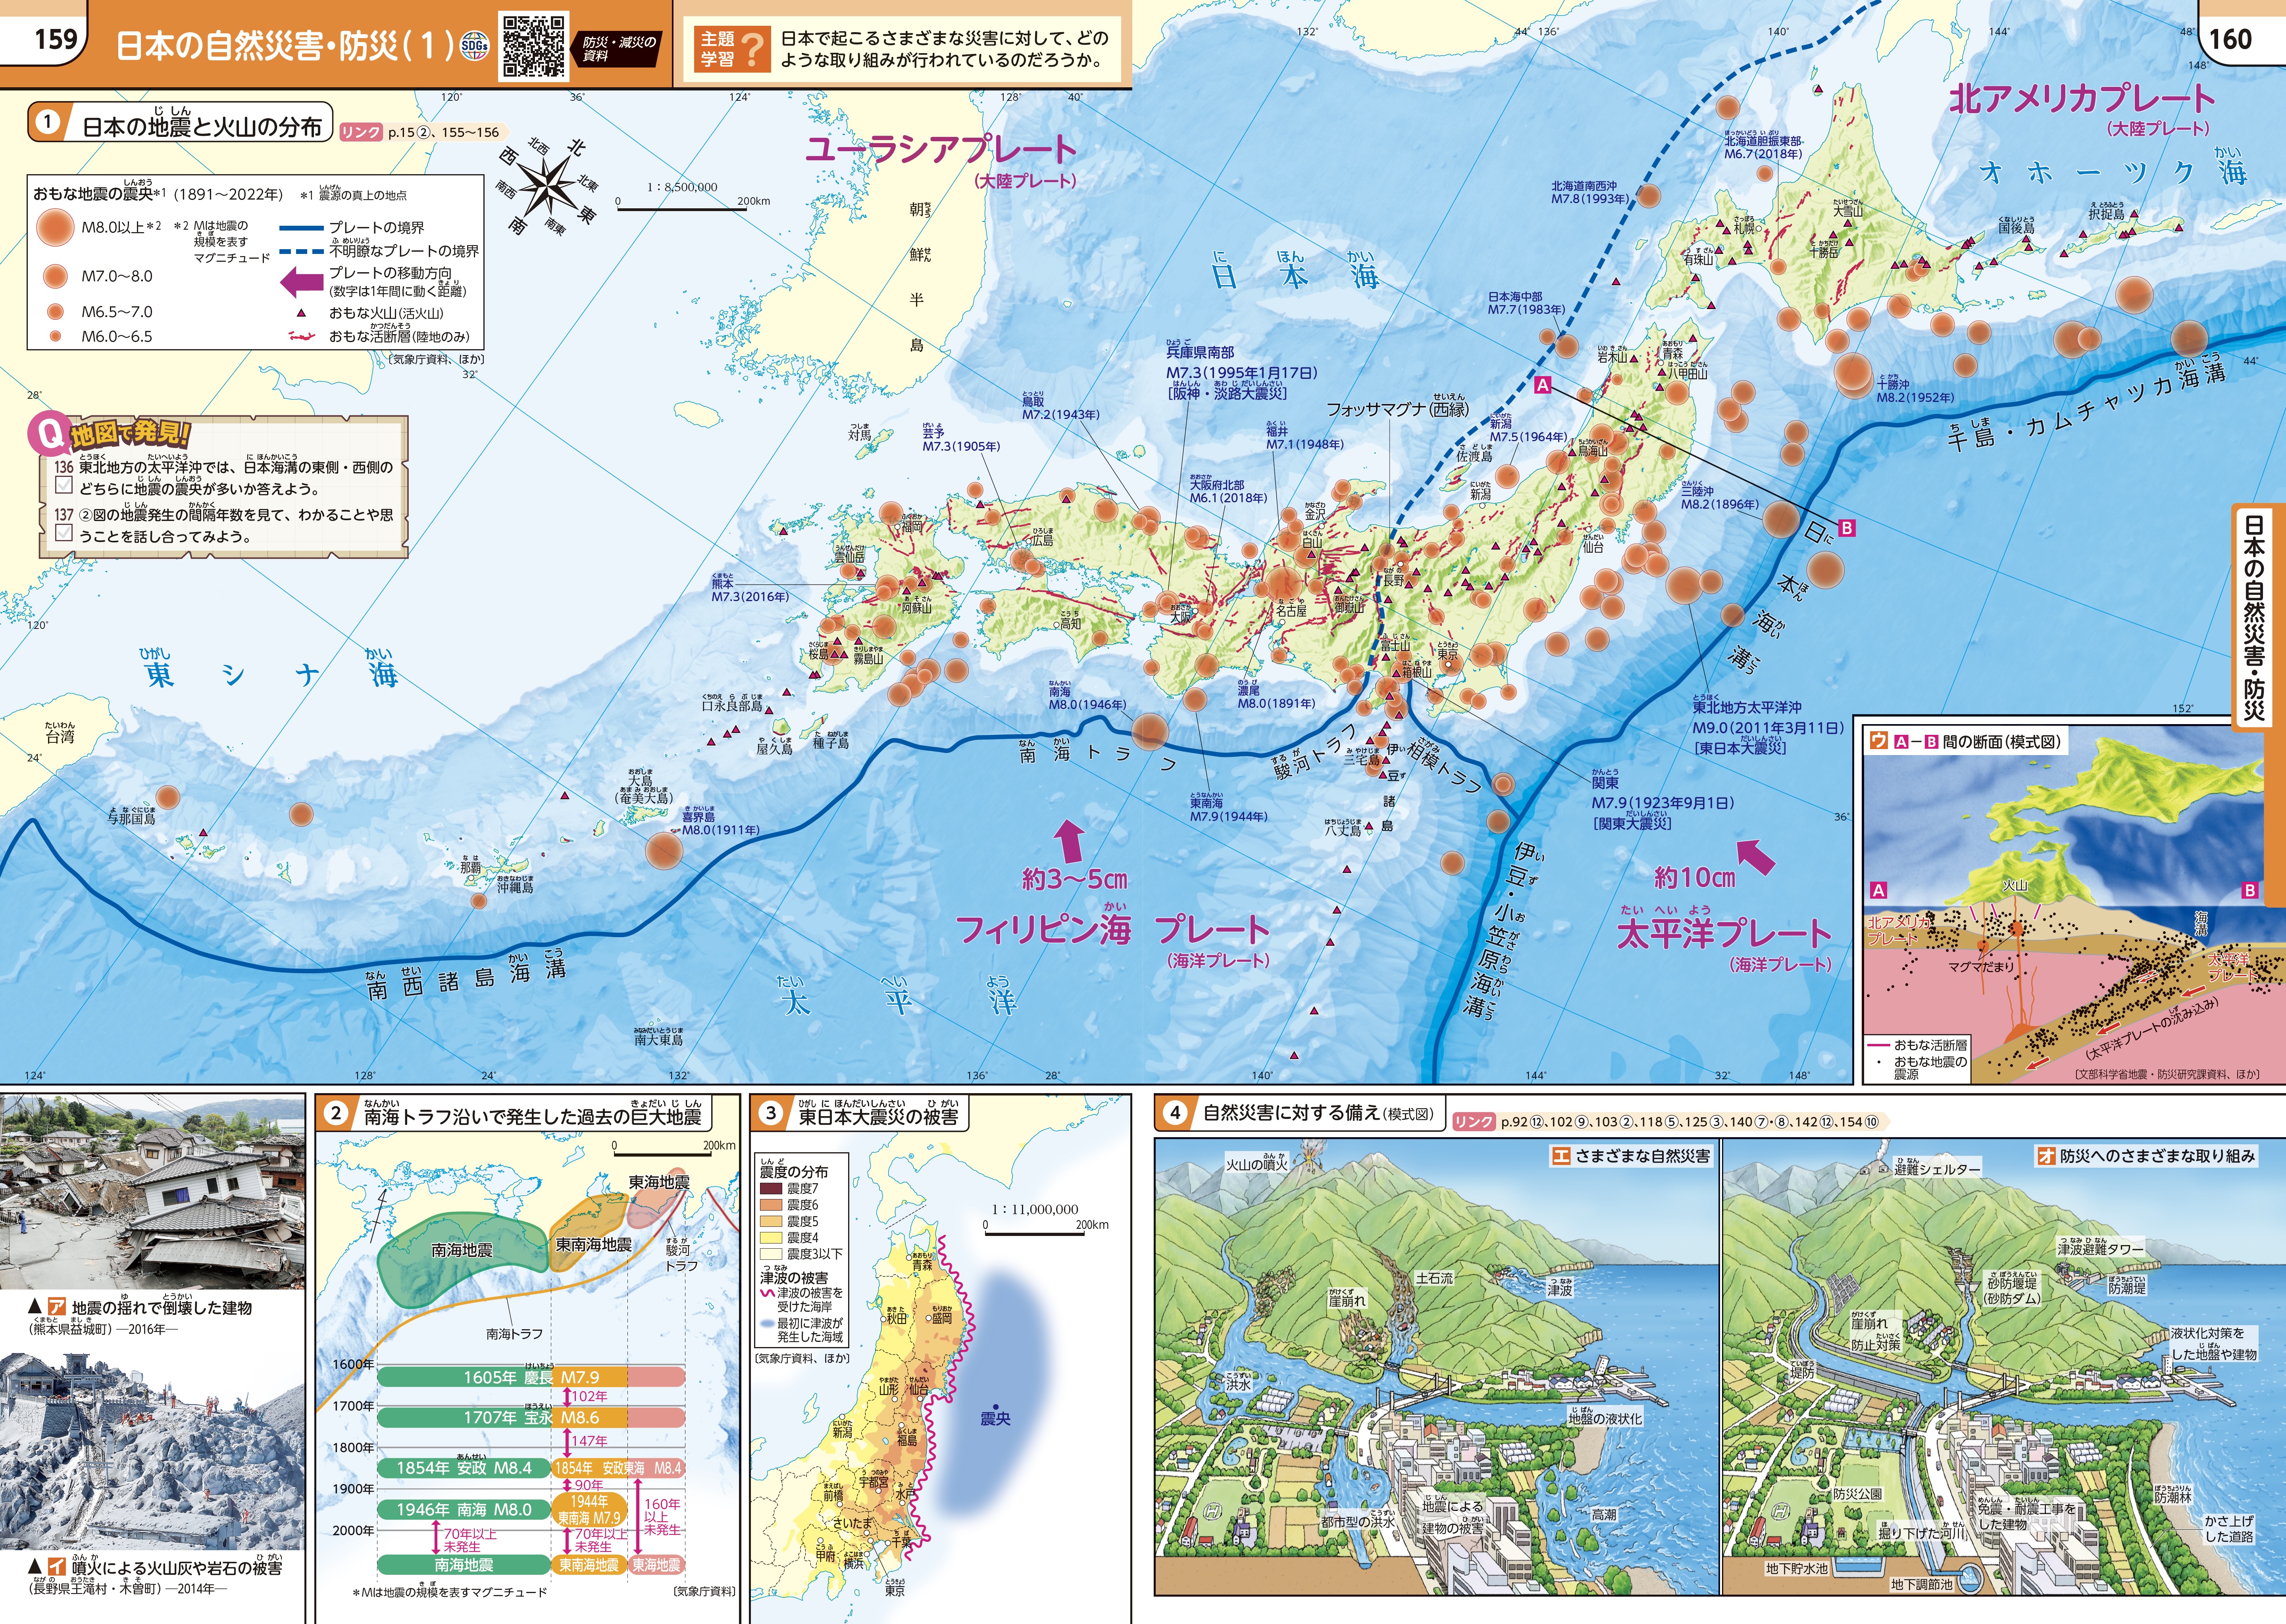 日本の自然災害・防災（1）p.159-160